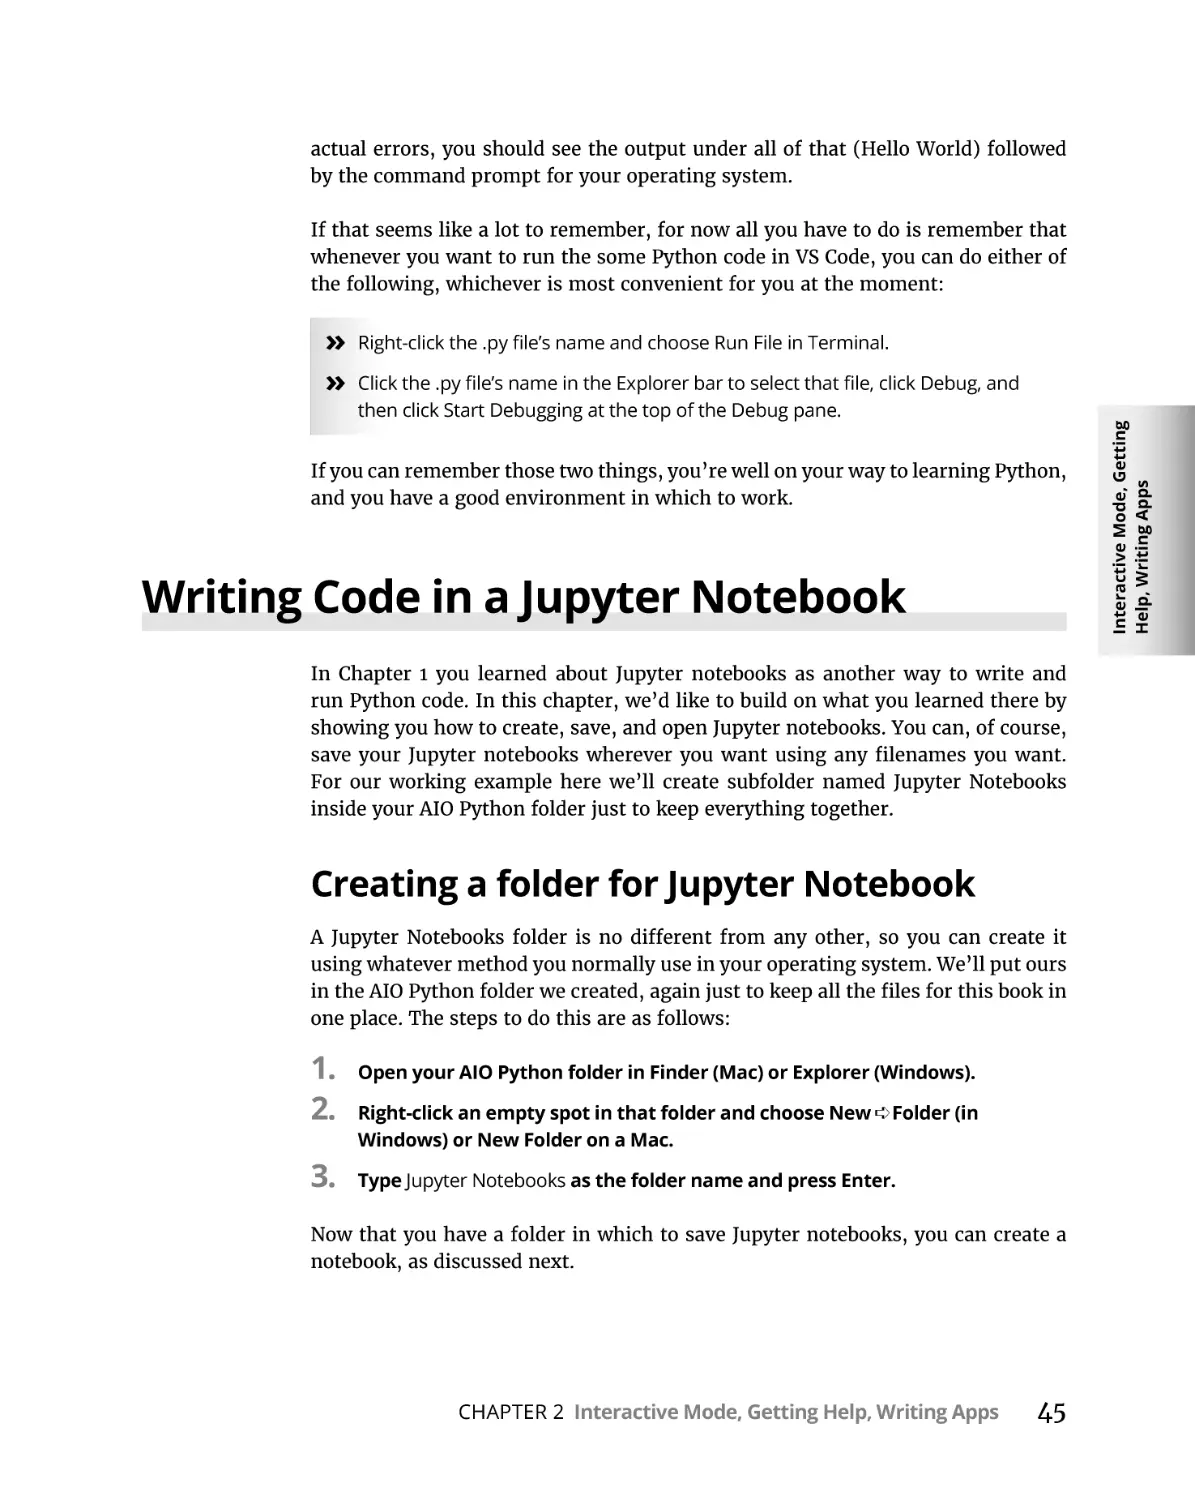 Writing Code in a Jupyter Notebook
Creating a folder for Jupyter Notebook